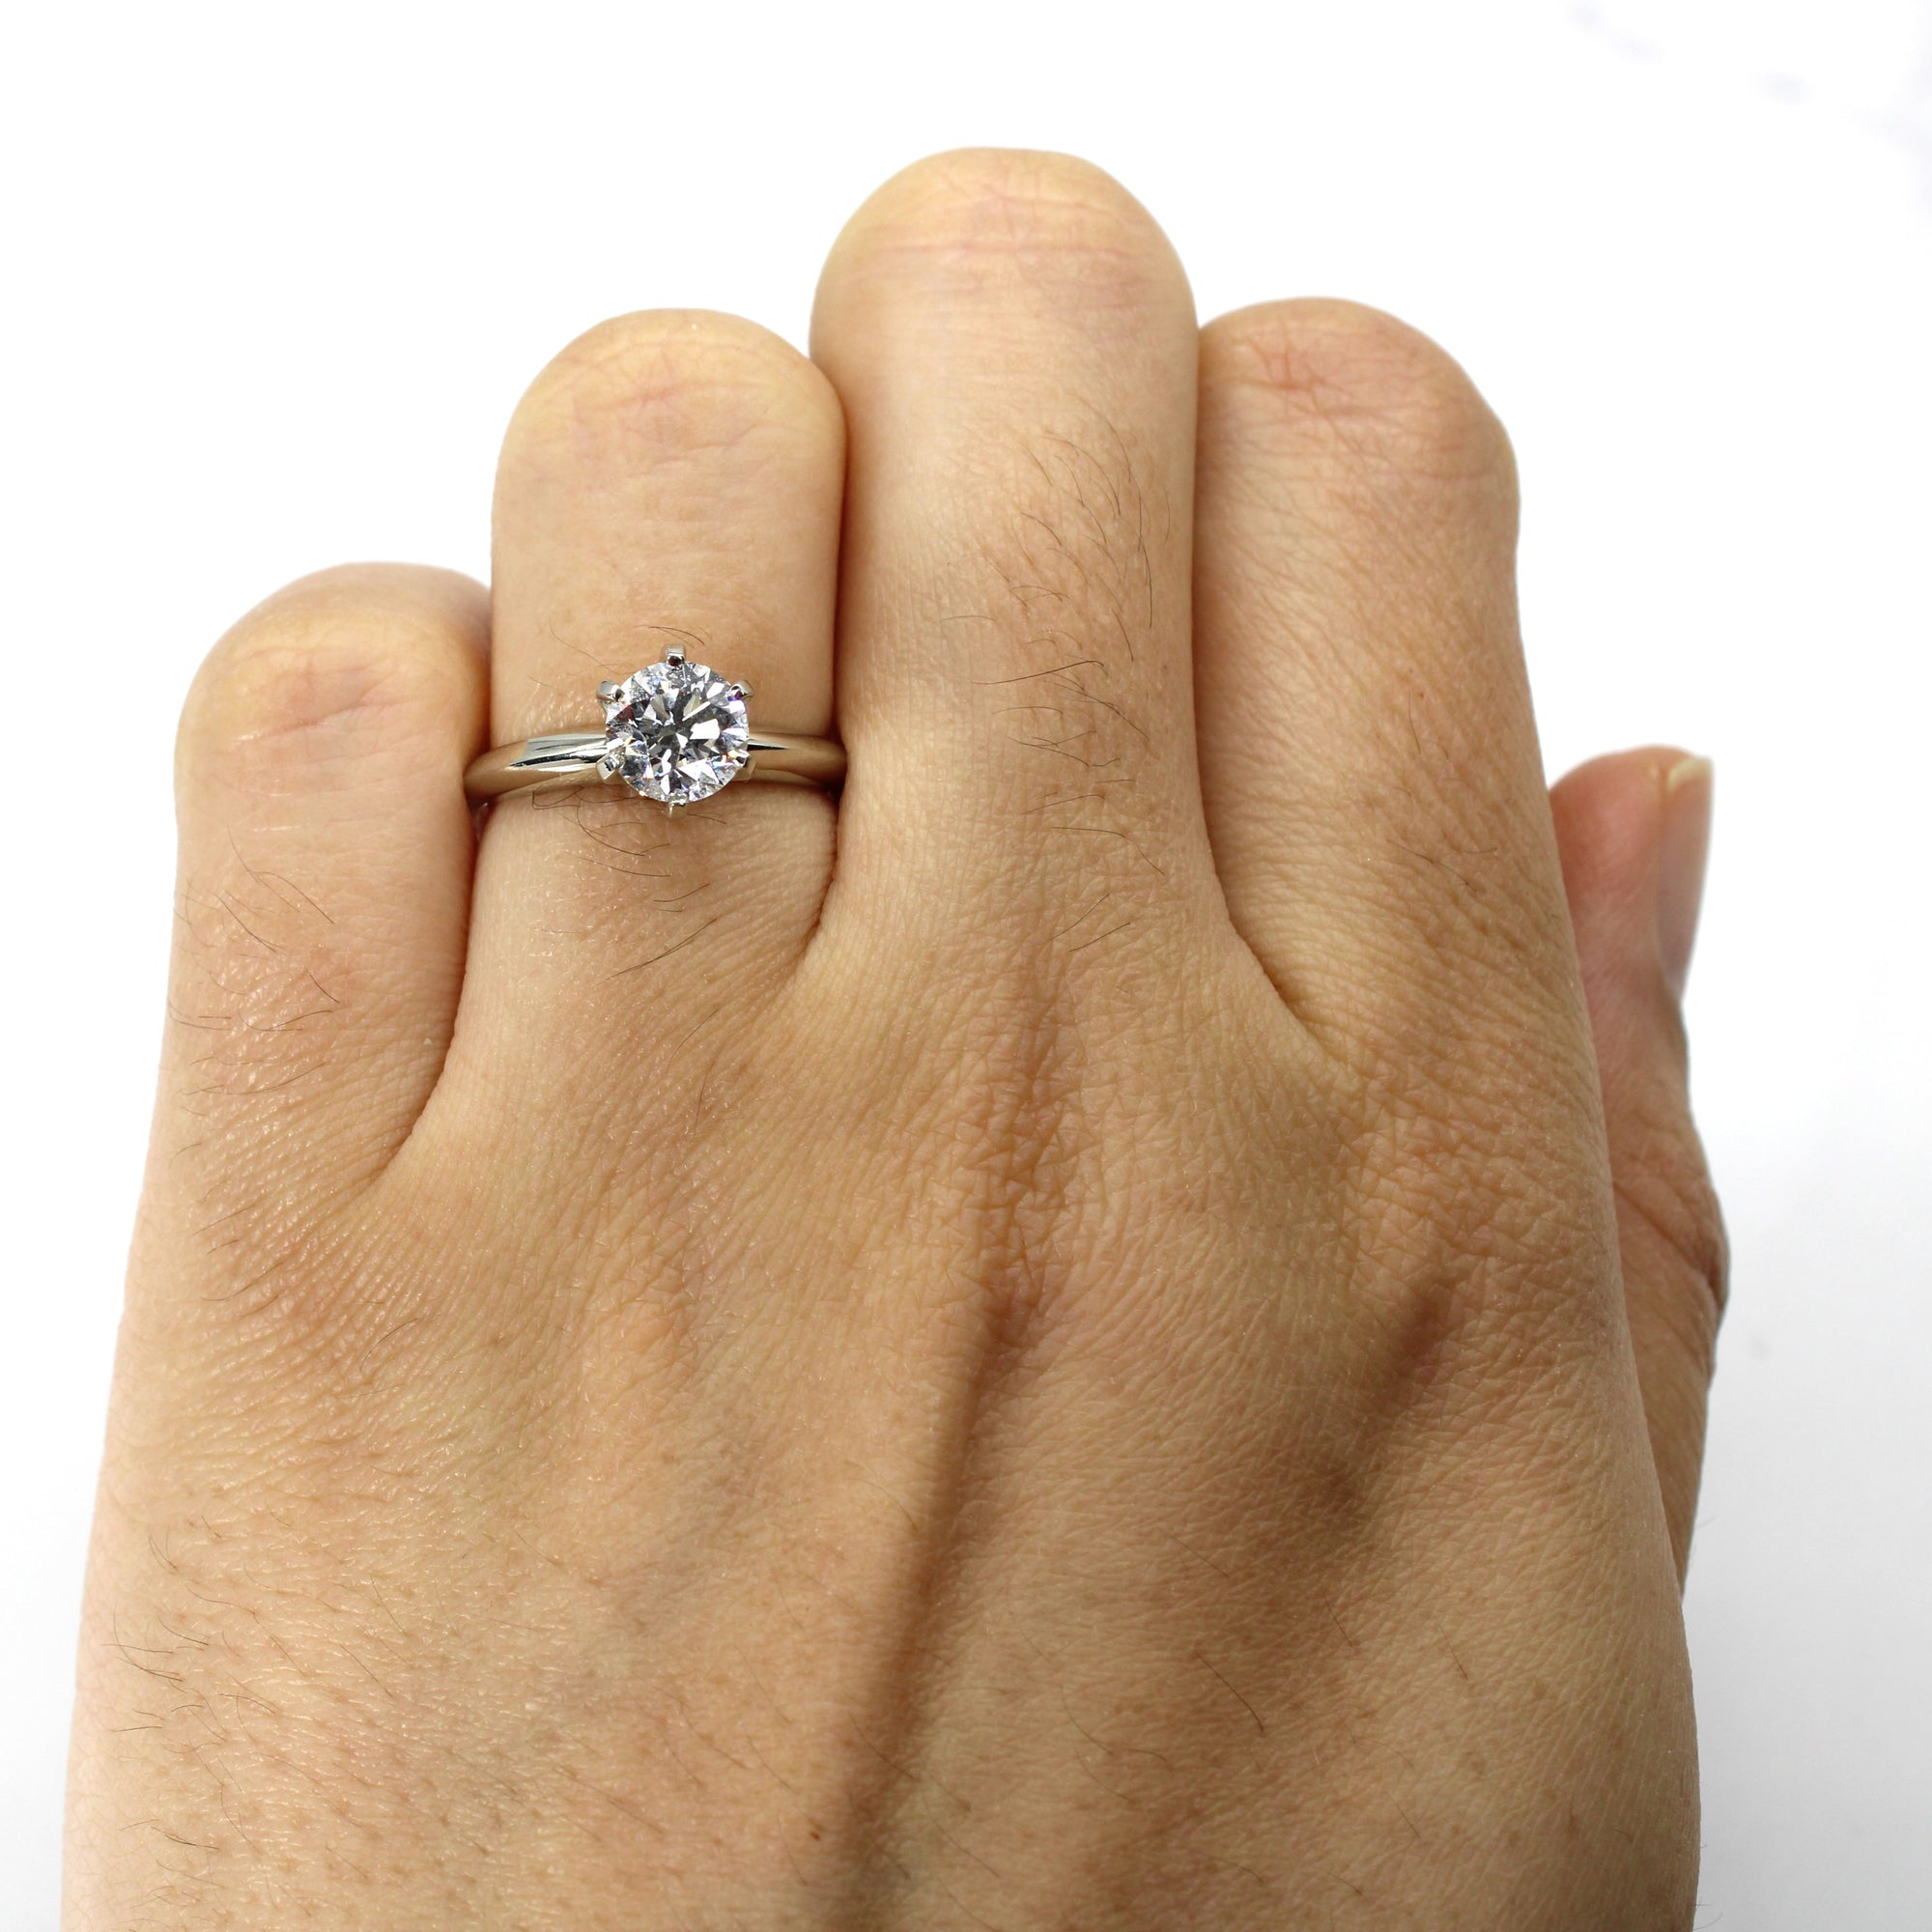 Six Prong Solitaire Diamond Ring | 1.01ct Vs2 F | SZ 5.25 |